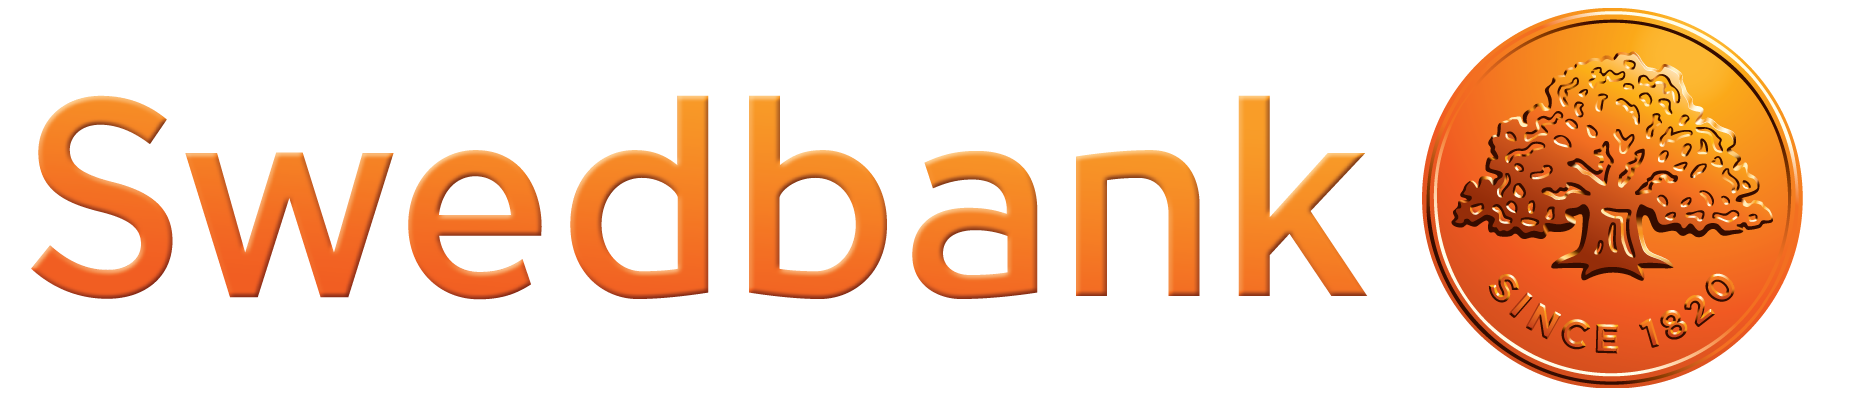 Swedbank Brand Logo